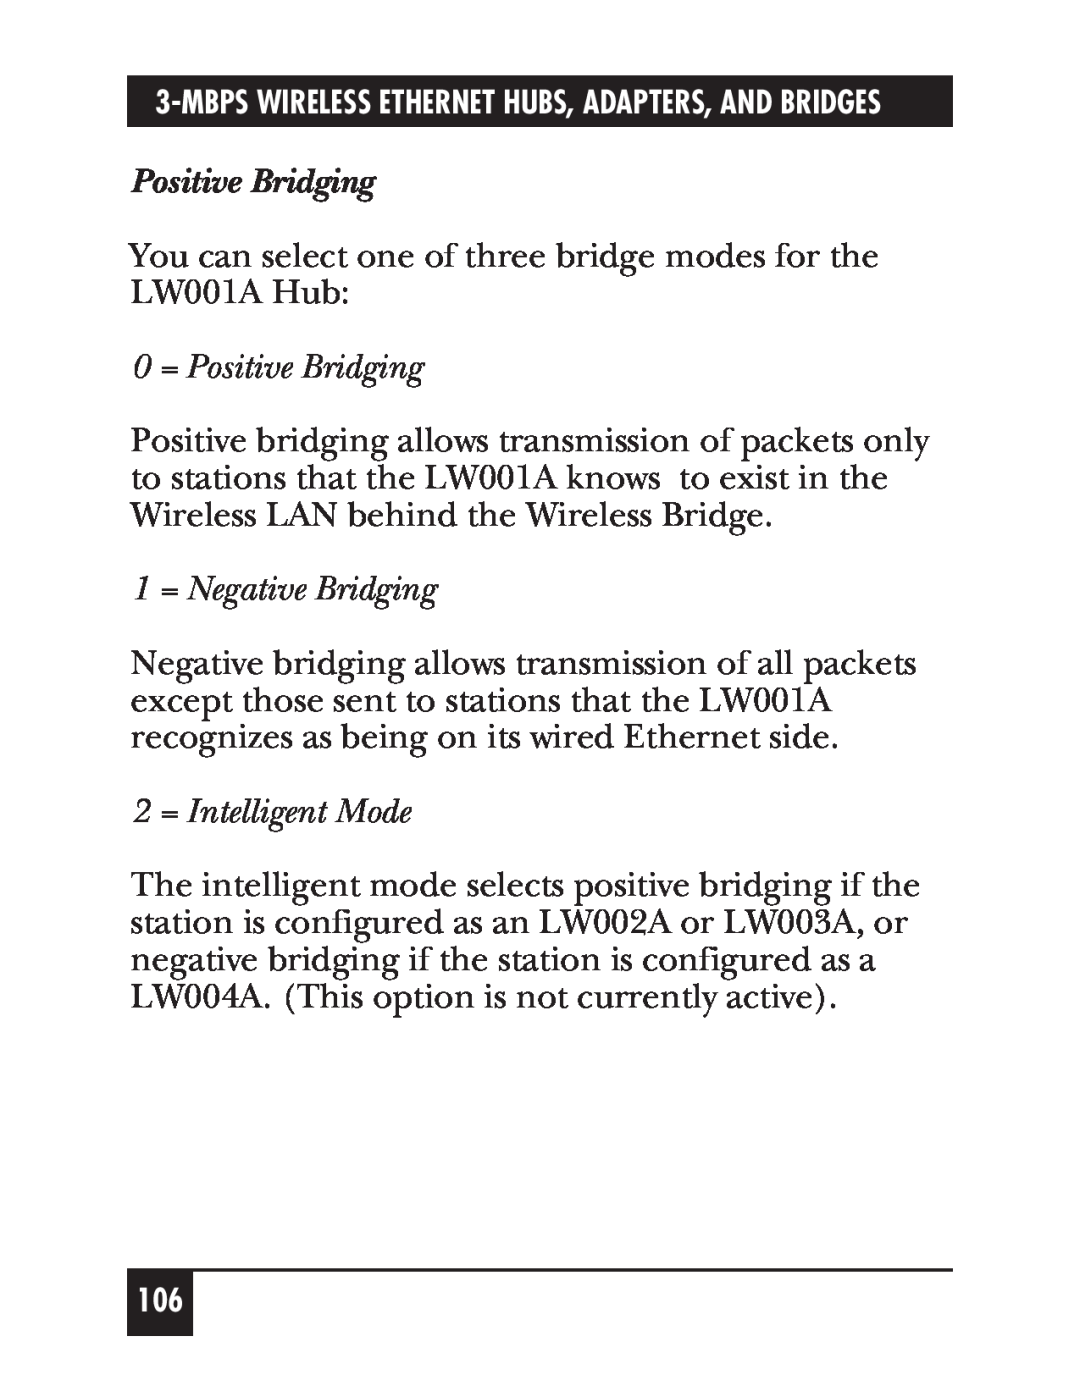 Black Box LW008A, LW012AE, LW011AE, LW005A, LW009A 0 = Positive Bridging, 1 = Negative Bridging, 2 = Intelligent Mode 